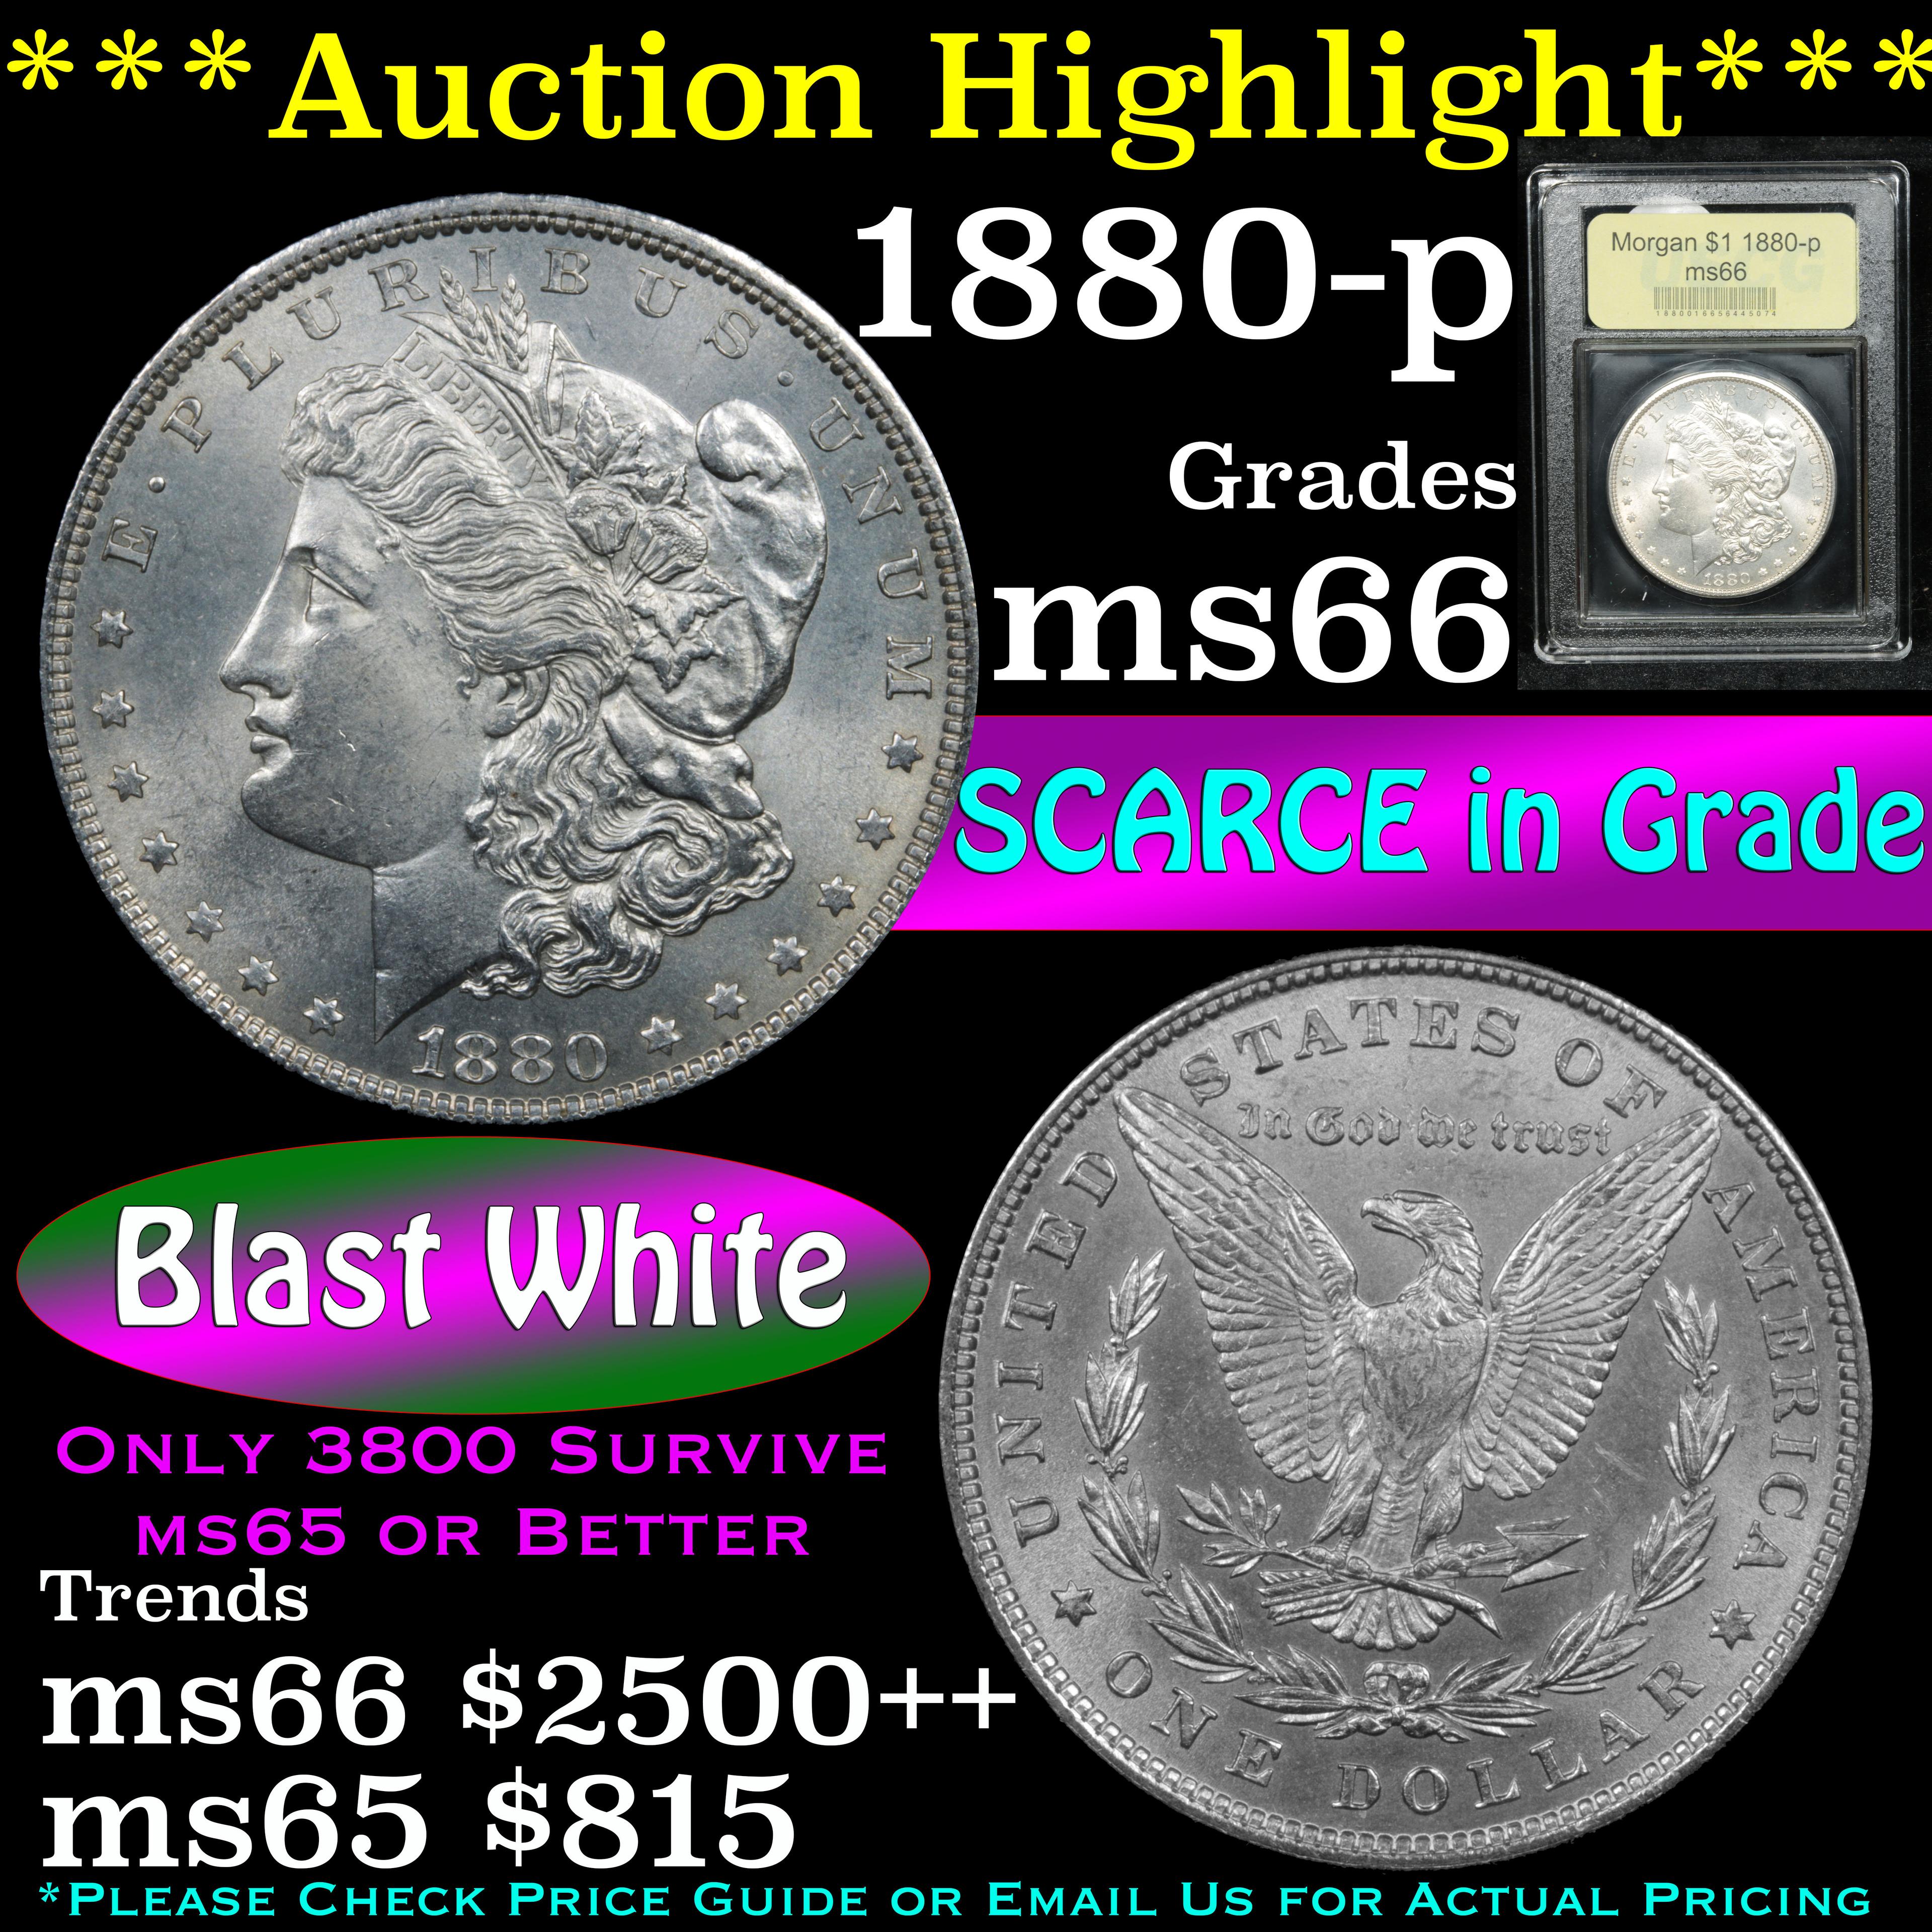 ***Auction Highlight*** 1880-p Morgan Dollar $1 Graded GEM+ Unc by USCG (fc)